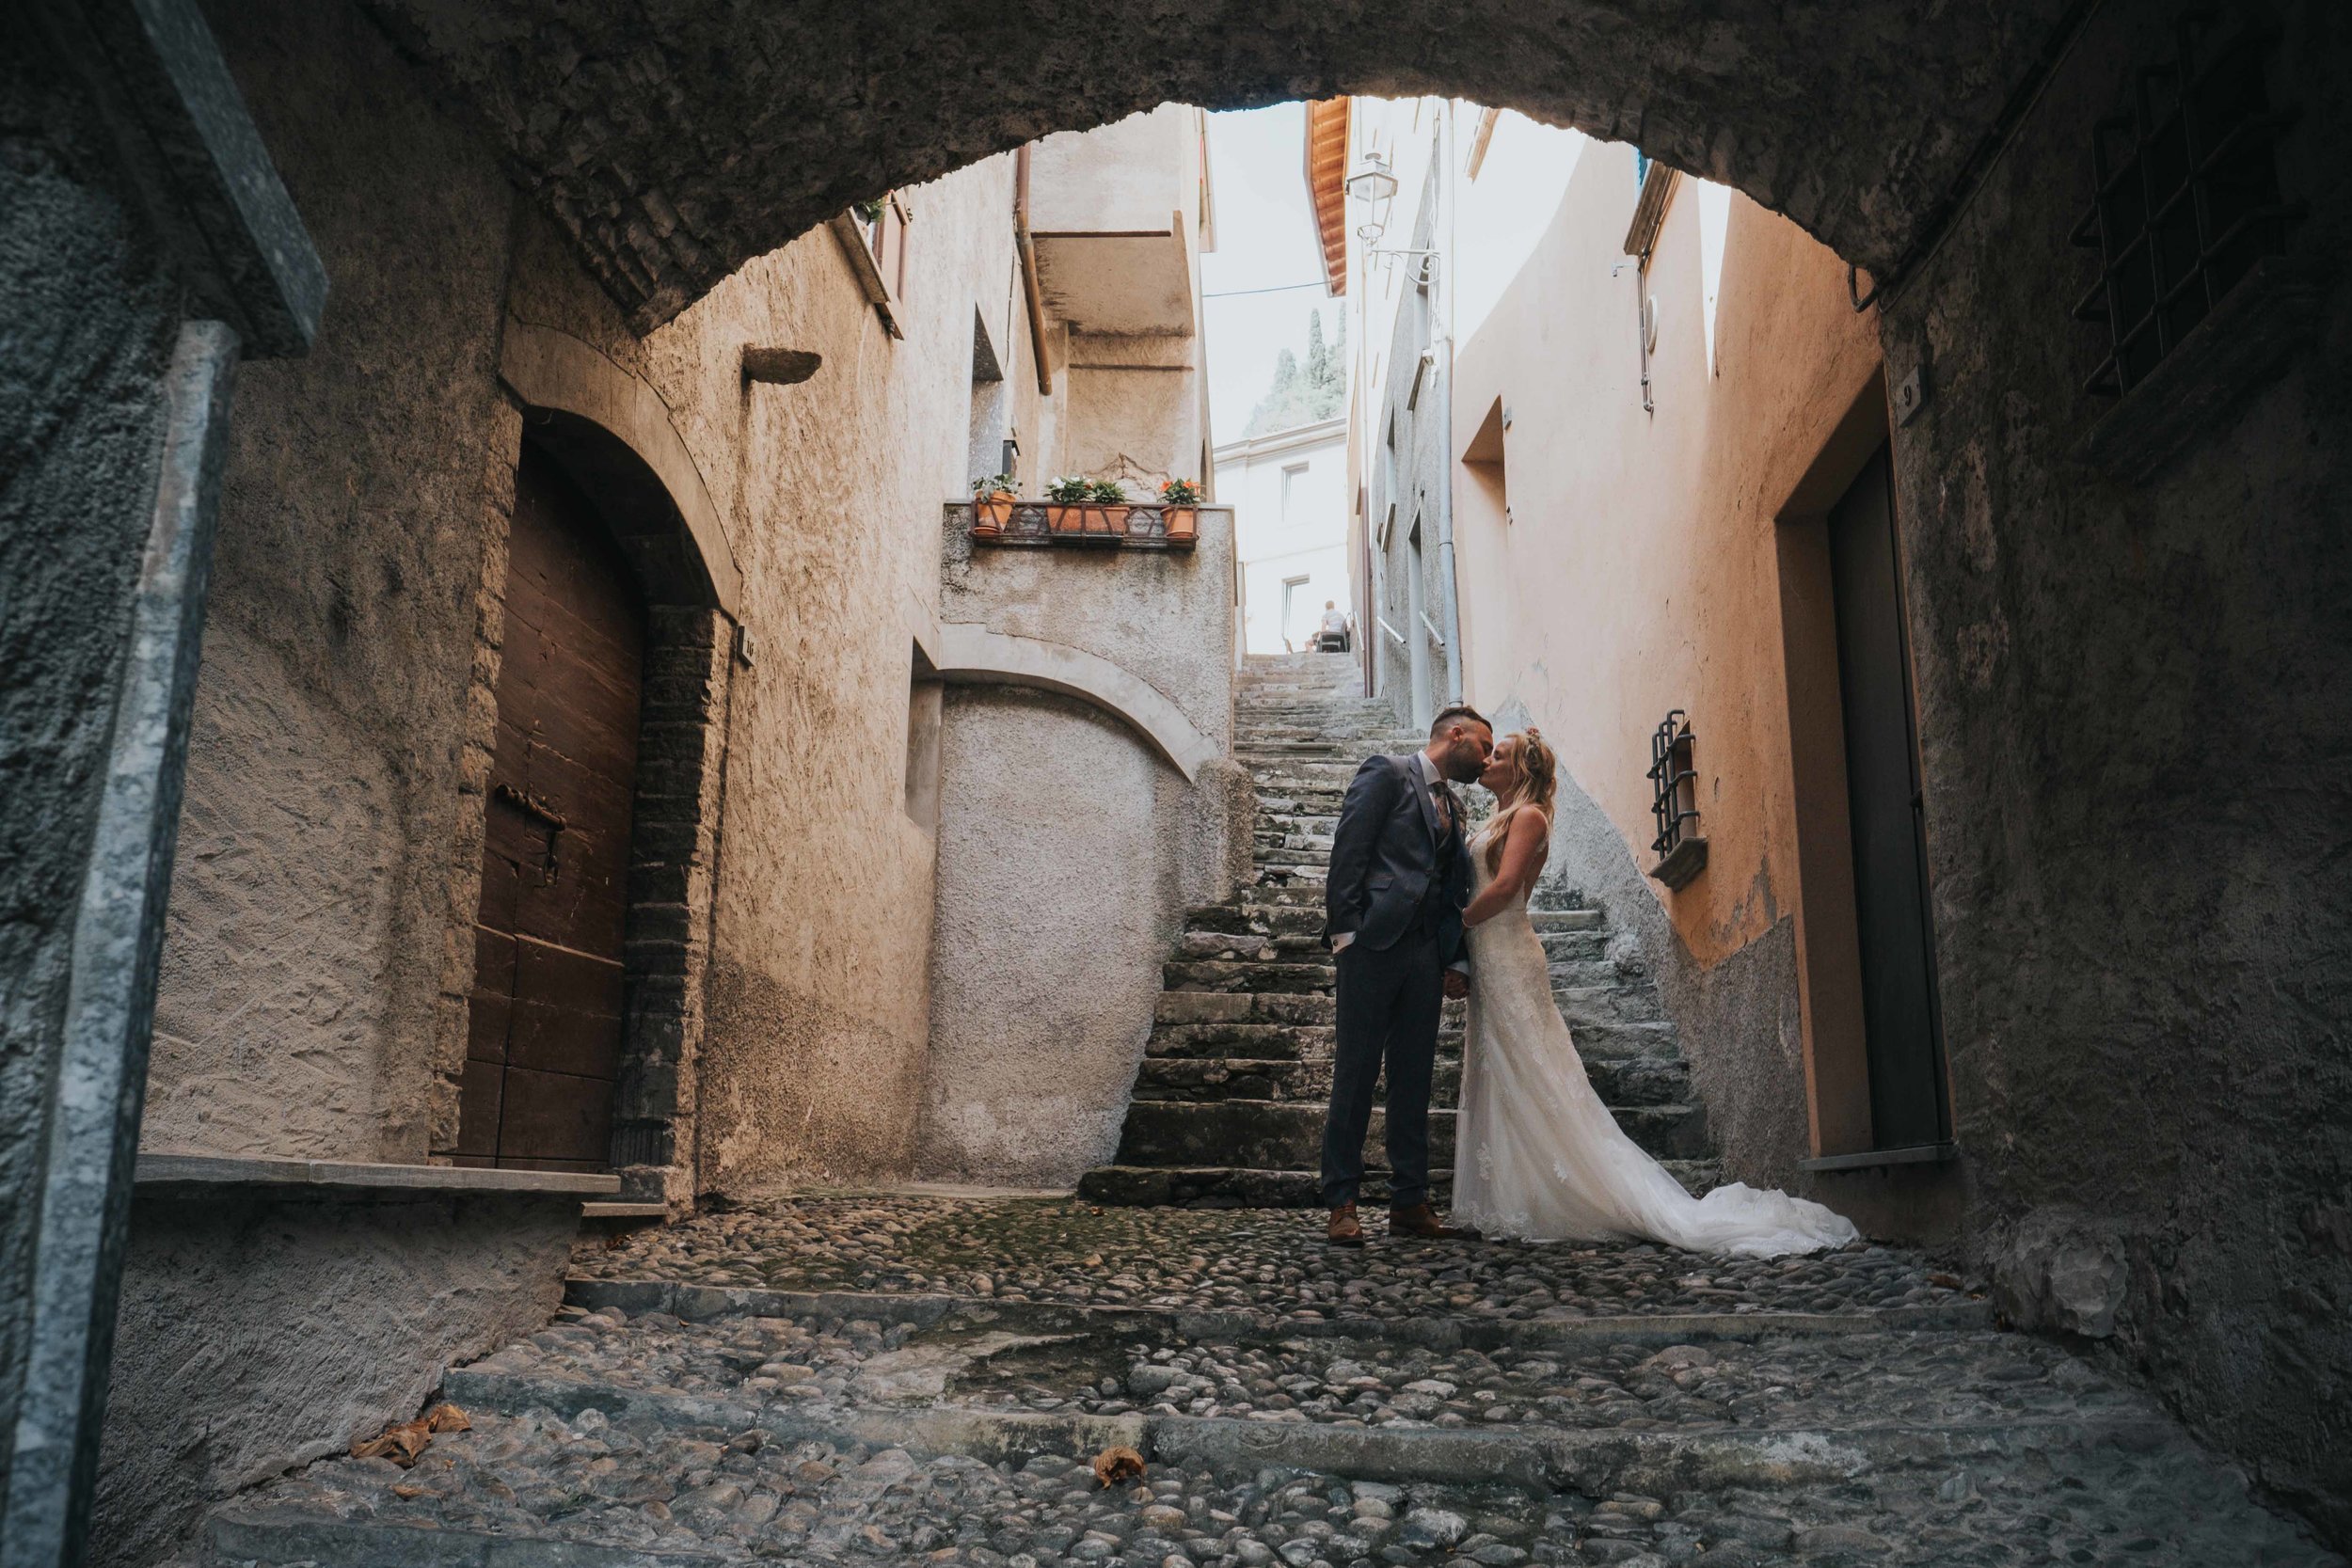 Laco Como Italy destination wedding photographer cheshire north west england documentry photography (76 of 117).jpg